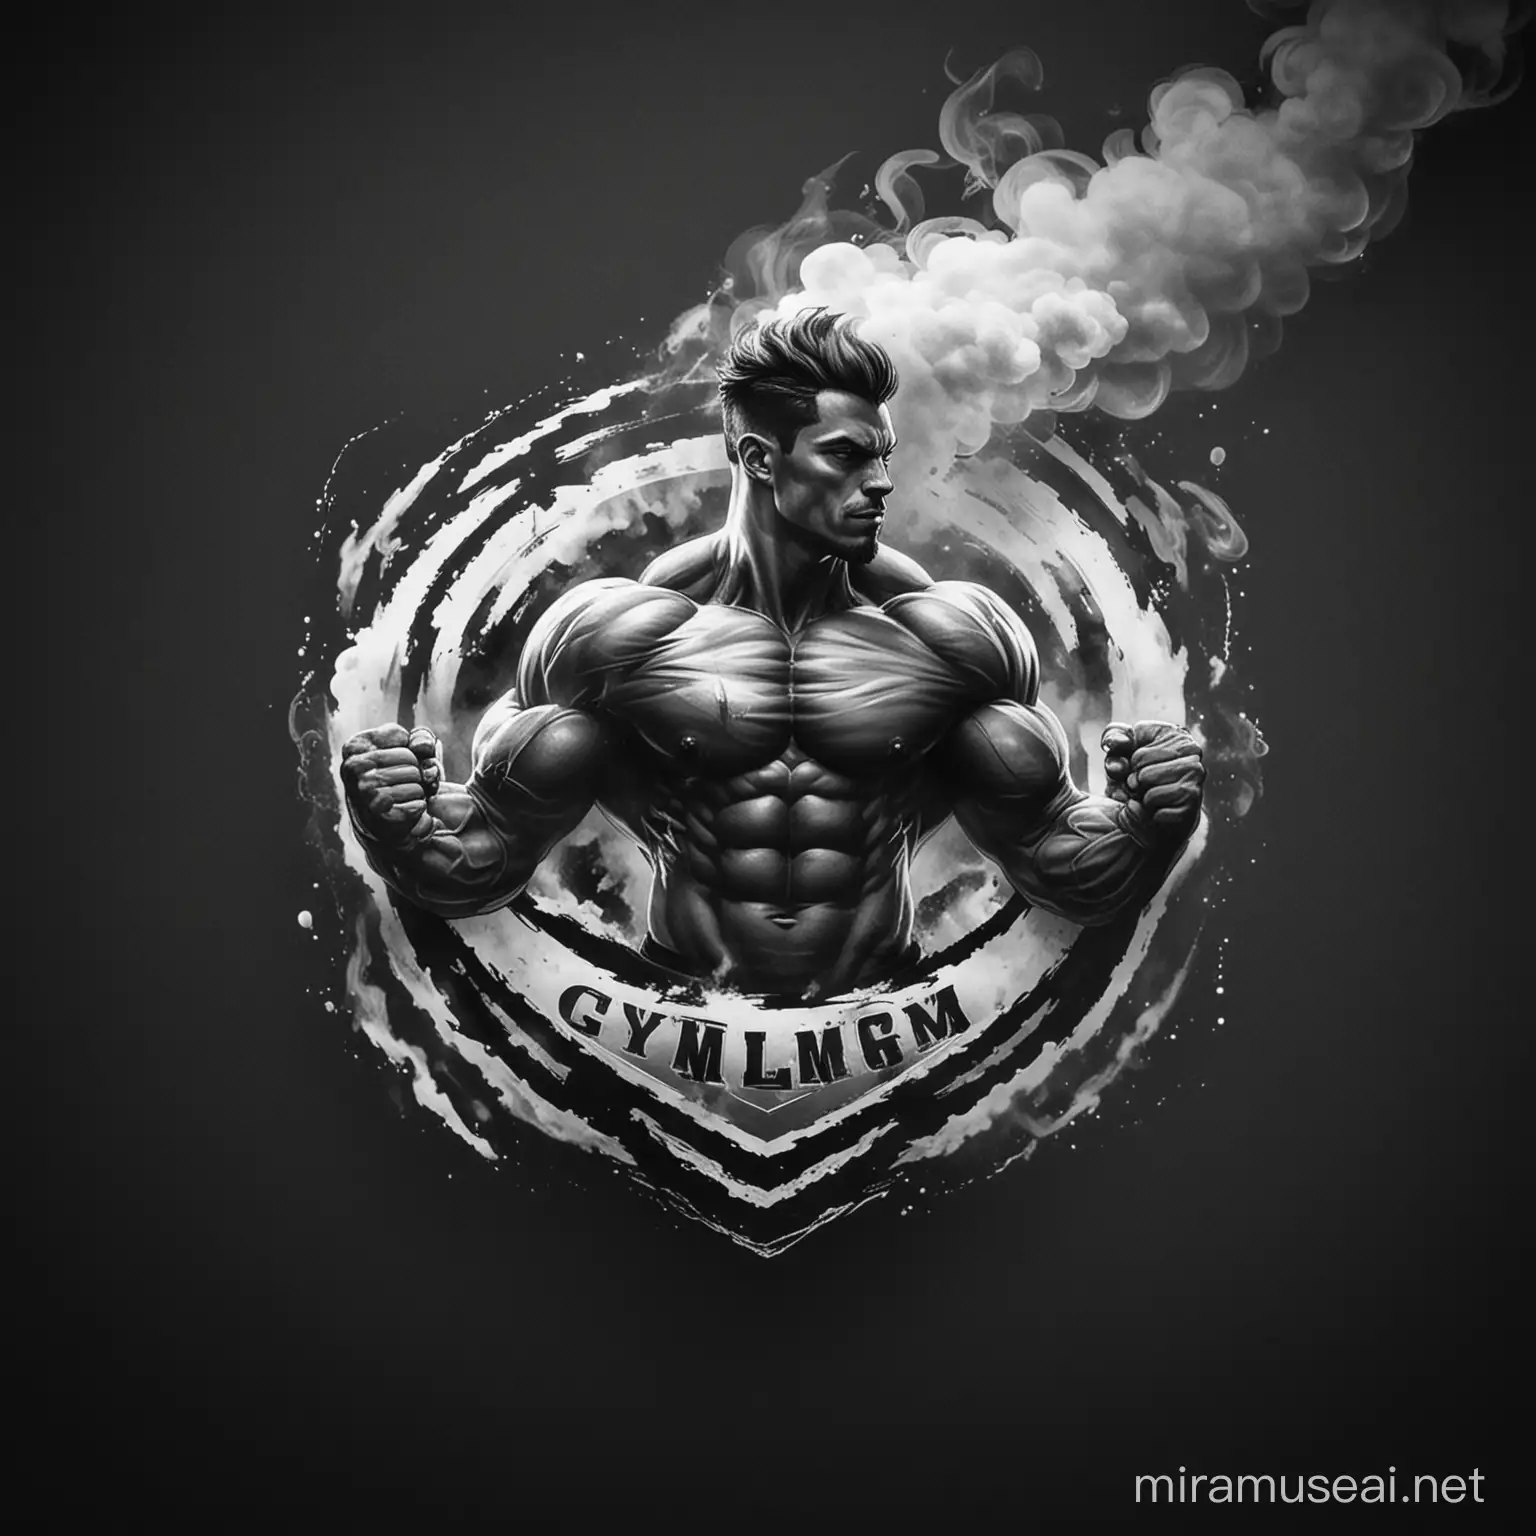 Dynamic Black and White Gym Logo with Smoke Effect